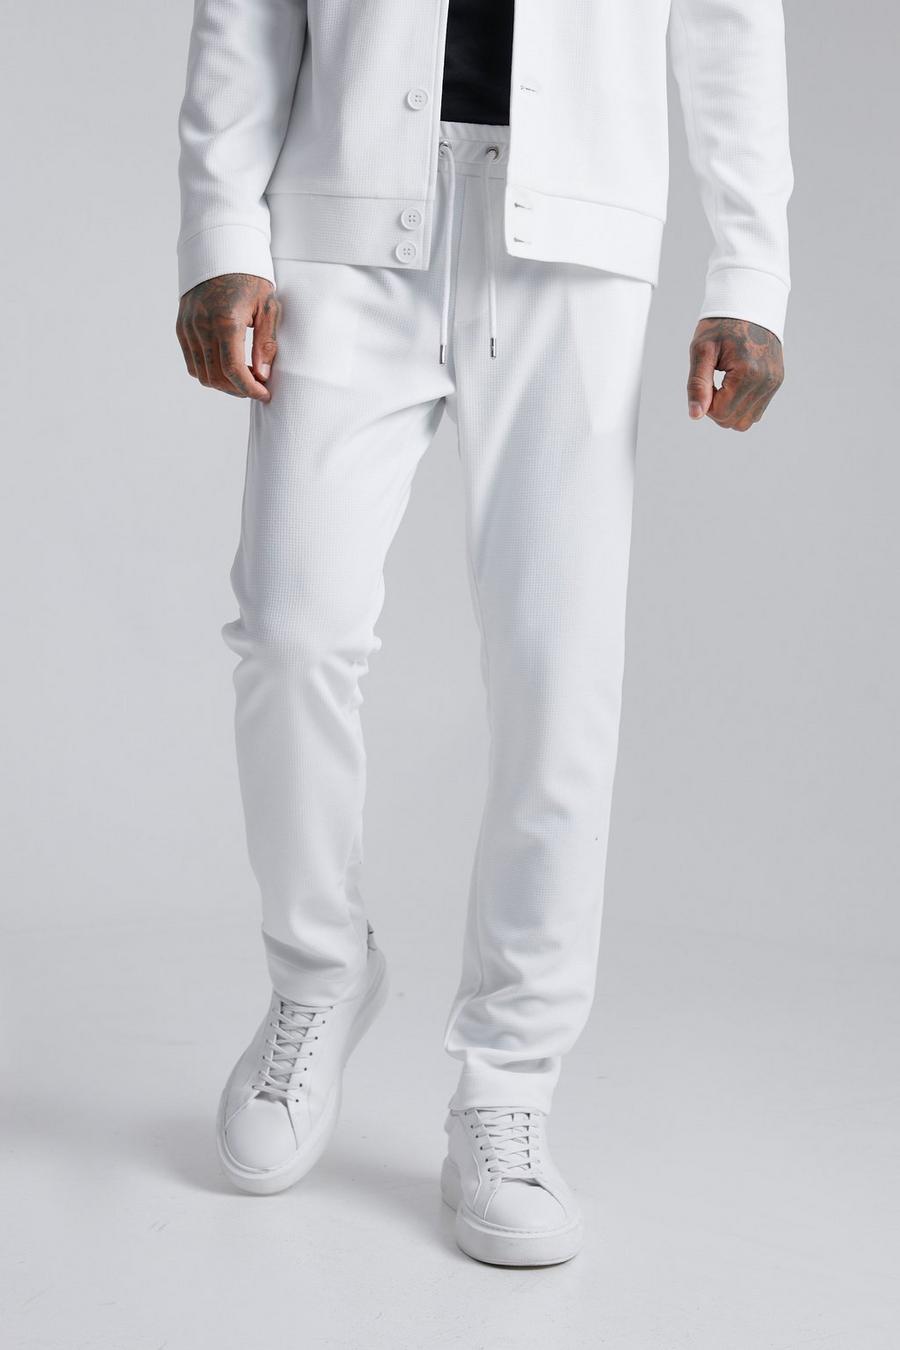 Pantalon slim gaufré, White blanc